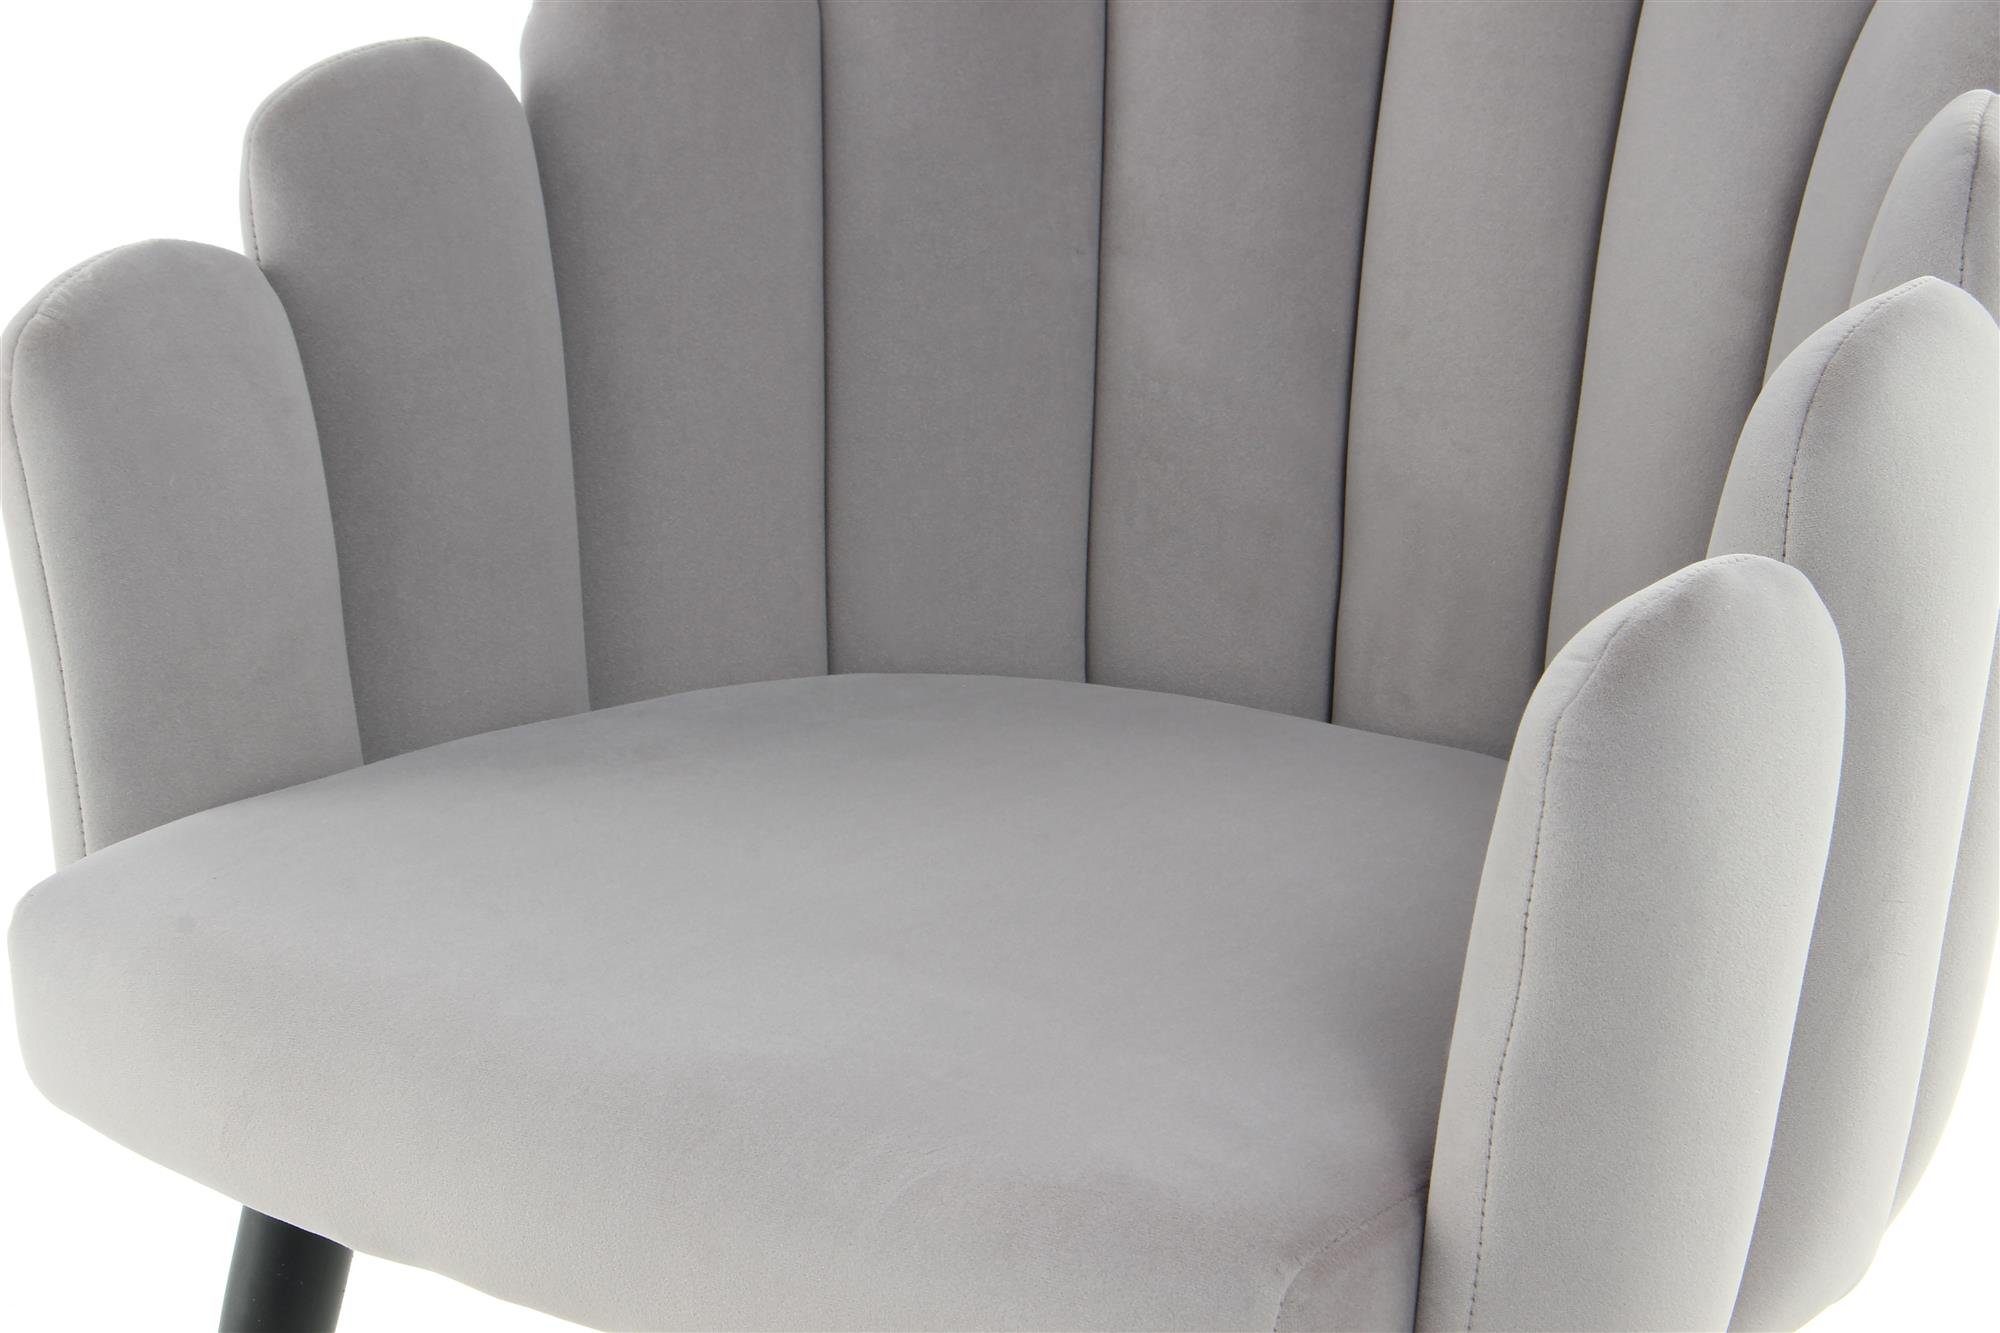 Qiyano Stuhl Sessel Samt-Stuhl Grau Wohnzimmer | Grau mit Armlehne Muschel-Form